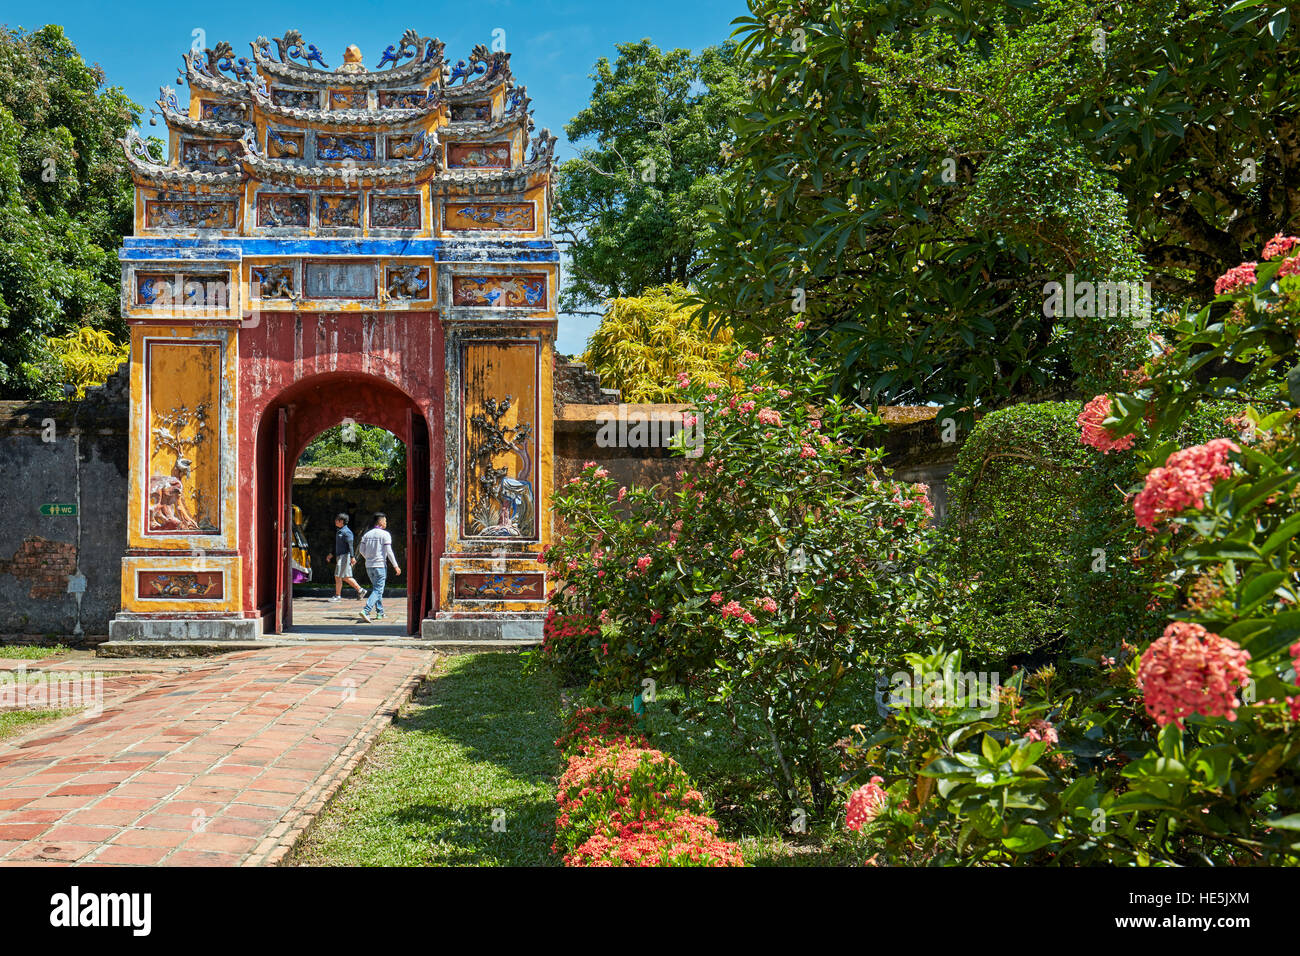 Puerta de entrada al templo a Hung mieu. Ciudad Imperial (La Ciudadela), Hue, Vietnam. Foto de stock